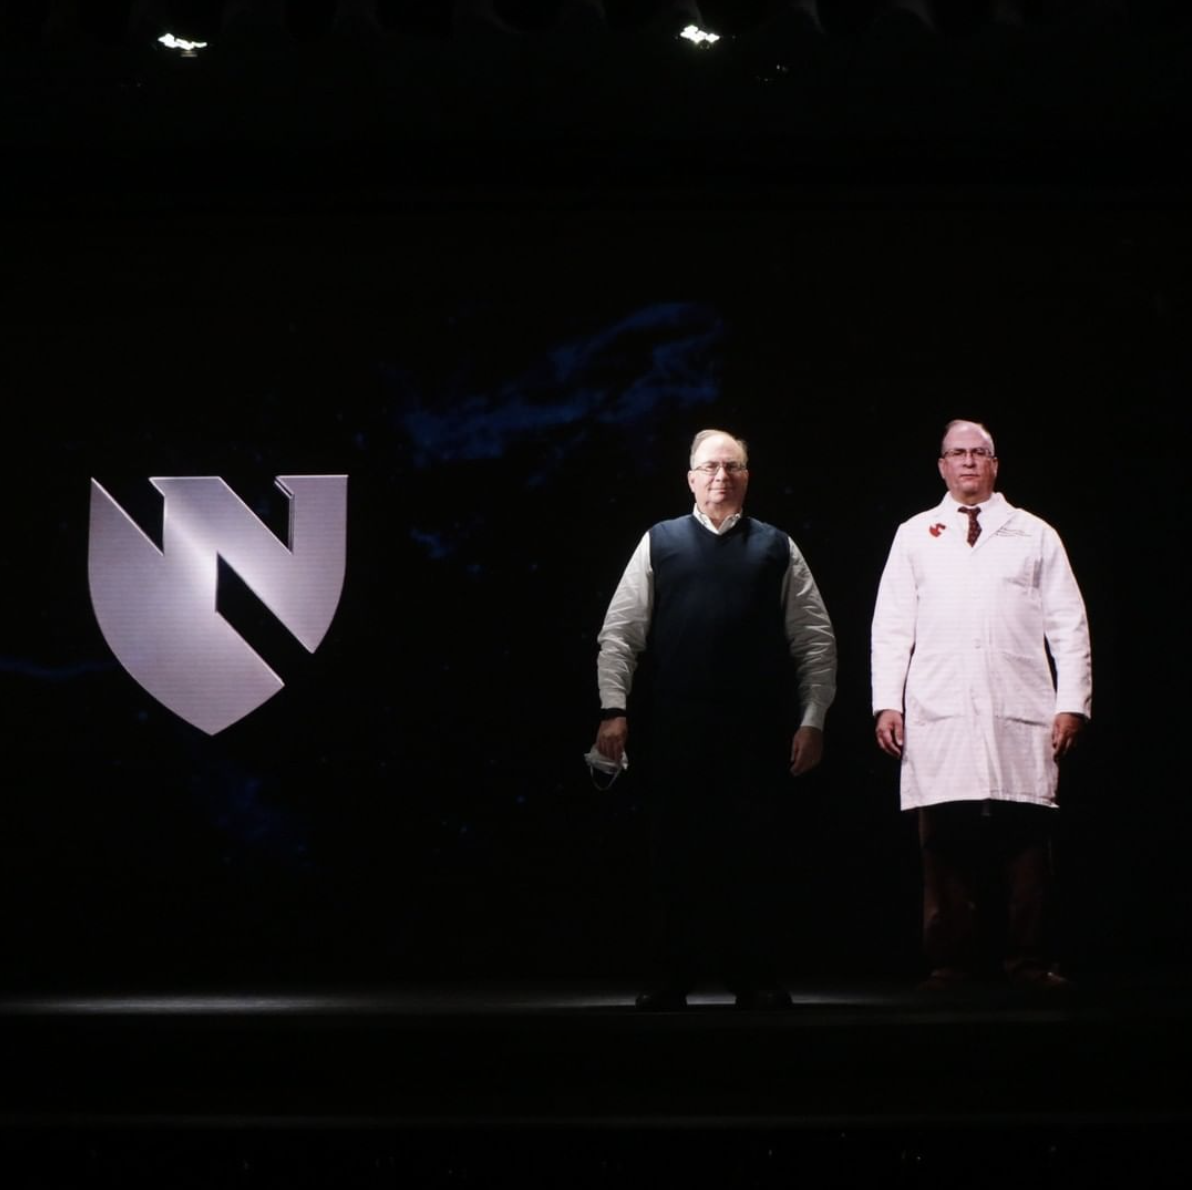 Dr. Robert Norgren stands next to his hologram